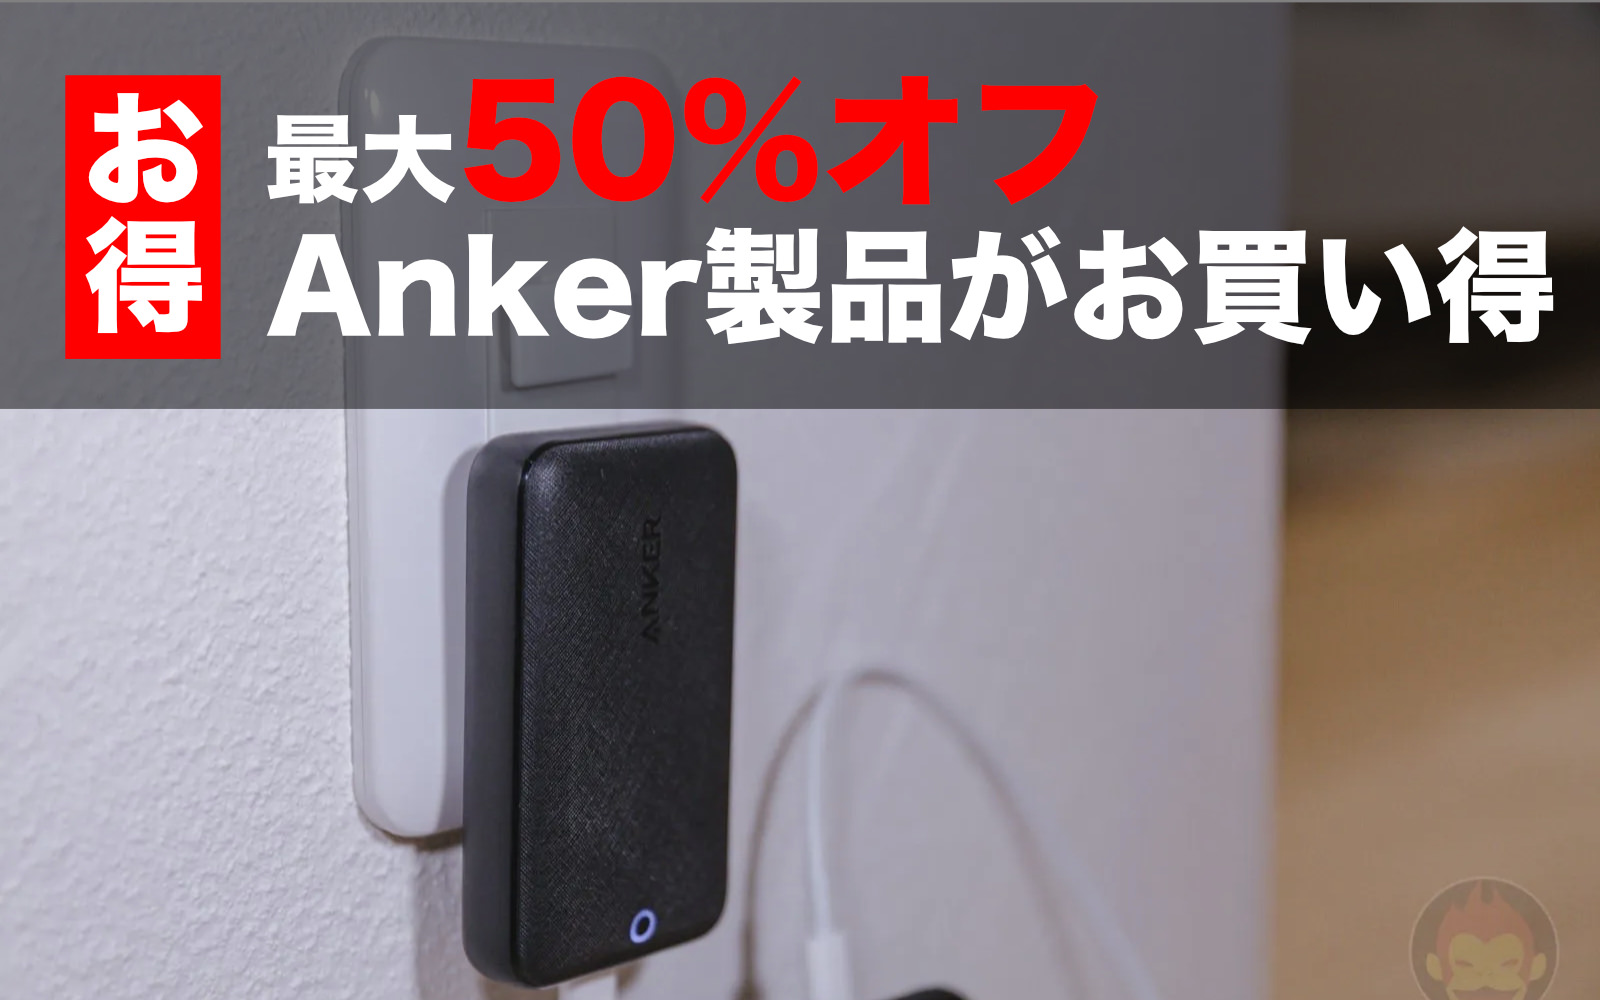 Anker 50percent off sale